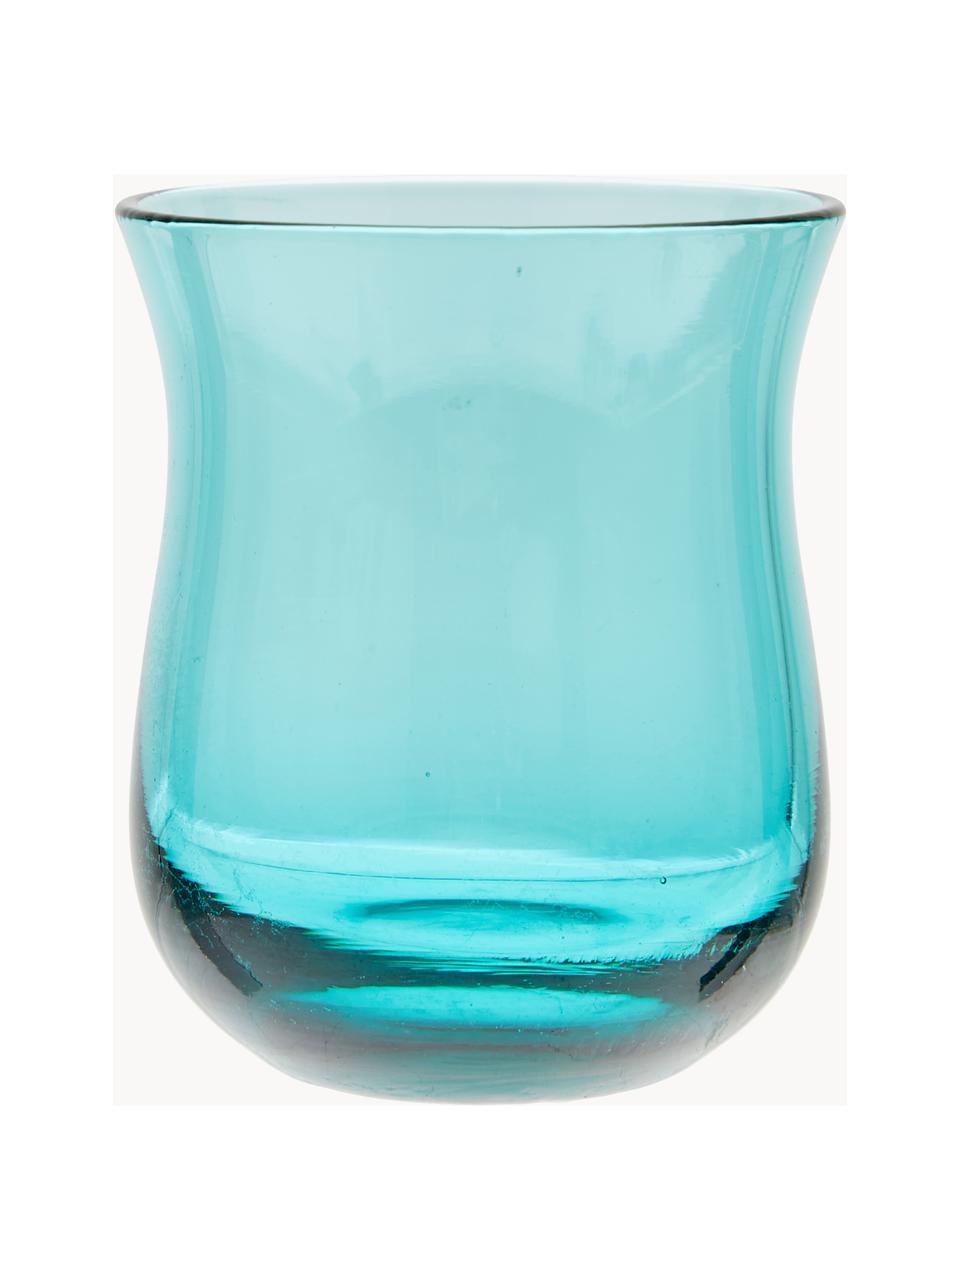 Vasos chupito de vidrio soplados artesanalmente Desiguale, 6 uds., Vidrio soplado artesanalmente, Multicolor transparente, Ø 6 x Al 6 cm, 90 ml